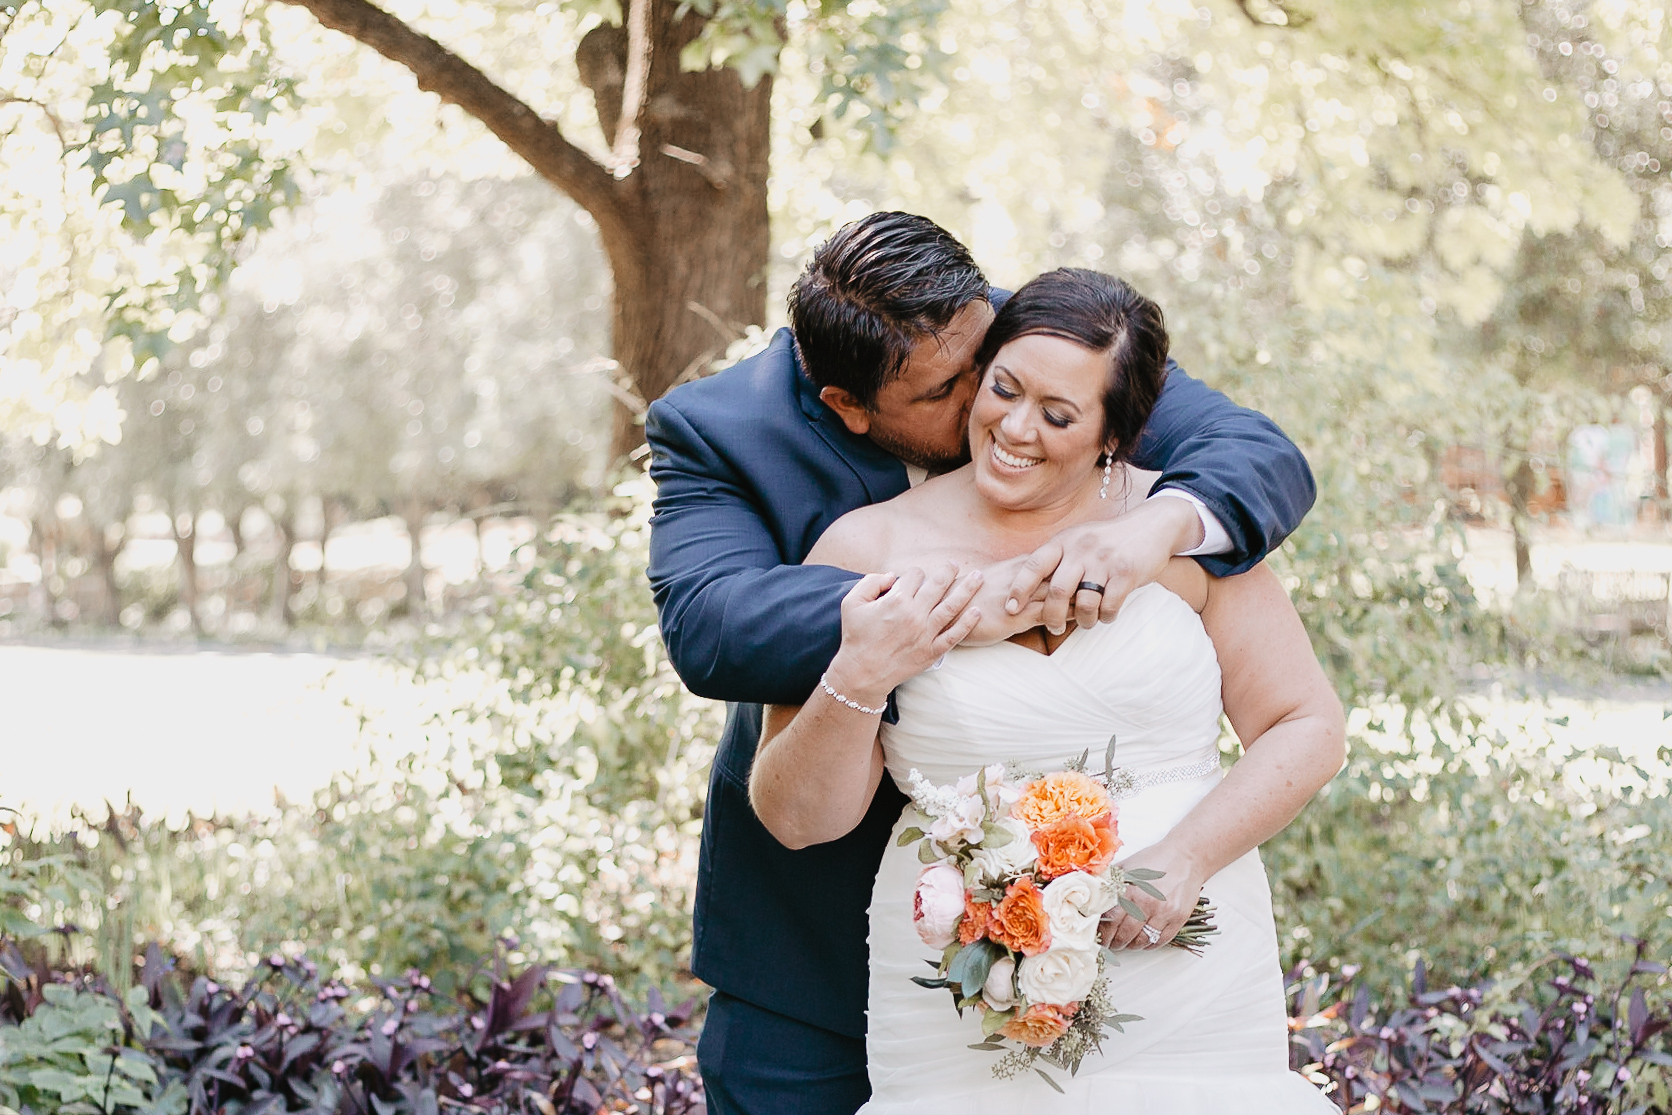 Heather + Javier | Navy and Gold Dallas Texas Discovery Gardens Botanical Wedding | Columbus and Dallas Wedding + Engagement Photographer | Catherine Milliron Photography